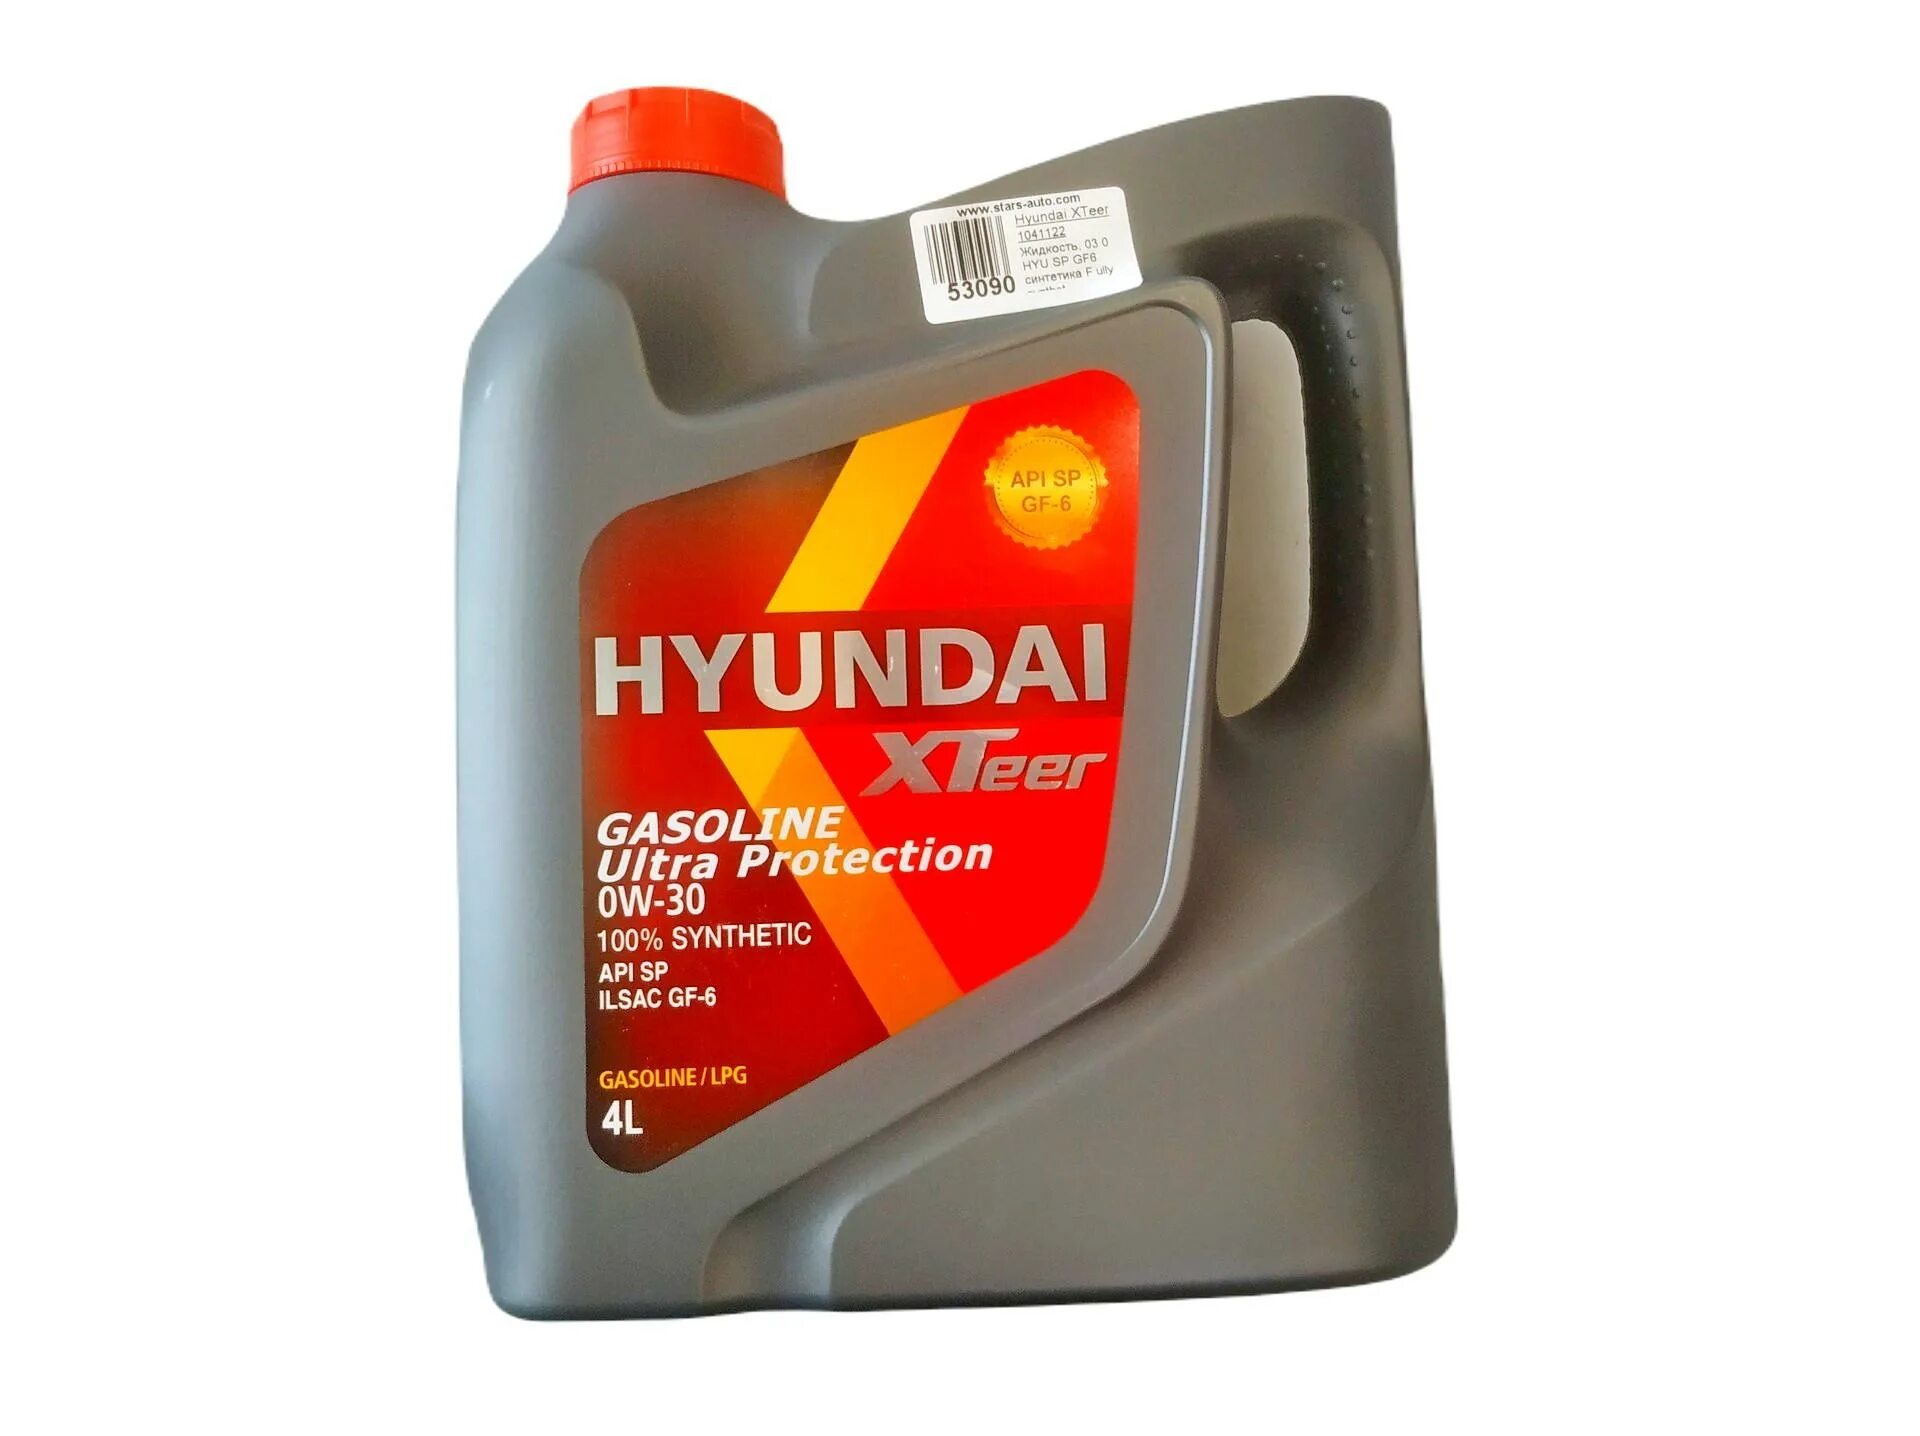 Hyundai xteer gasoline отзывы. Hyundai XTEER Ultra Protection 1l. Hyundai XTEER 1041412. Hyundai XTEER Gear Oil-5 75w90. Hyundai XTEER 1041126 Hyundai XTEER (g800) gasoline Ultra Protection.